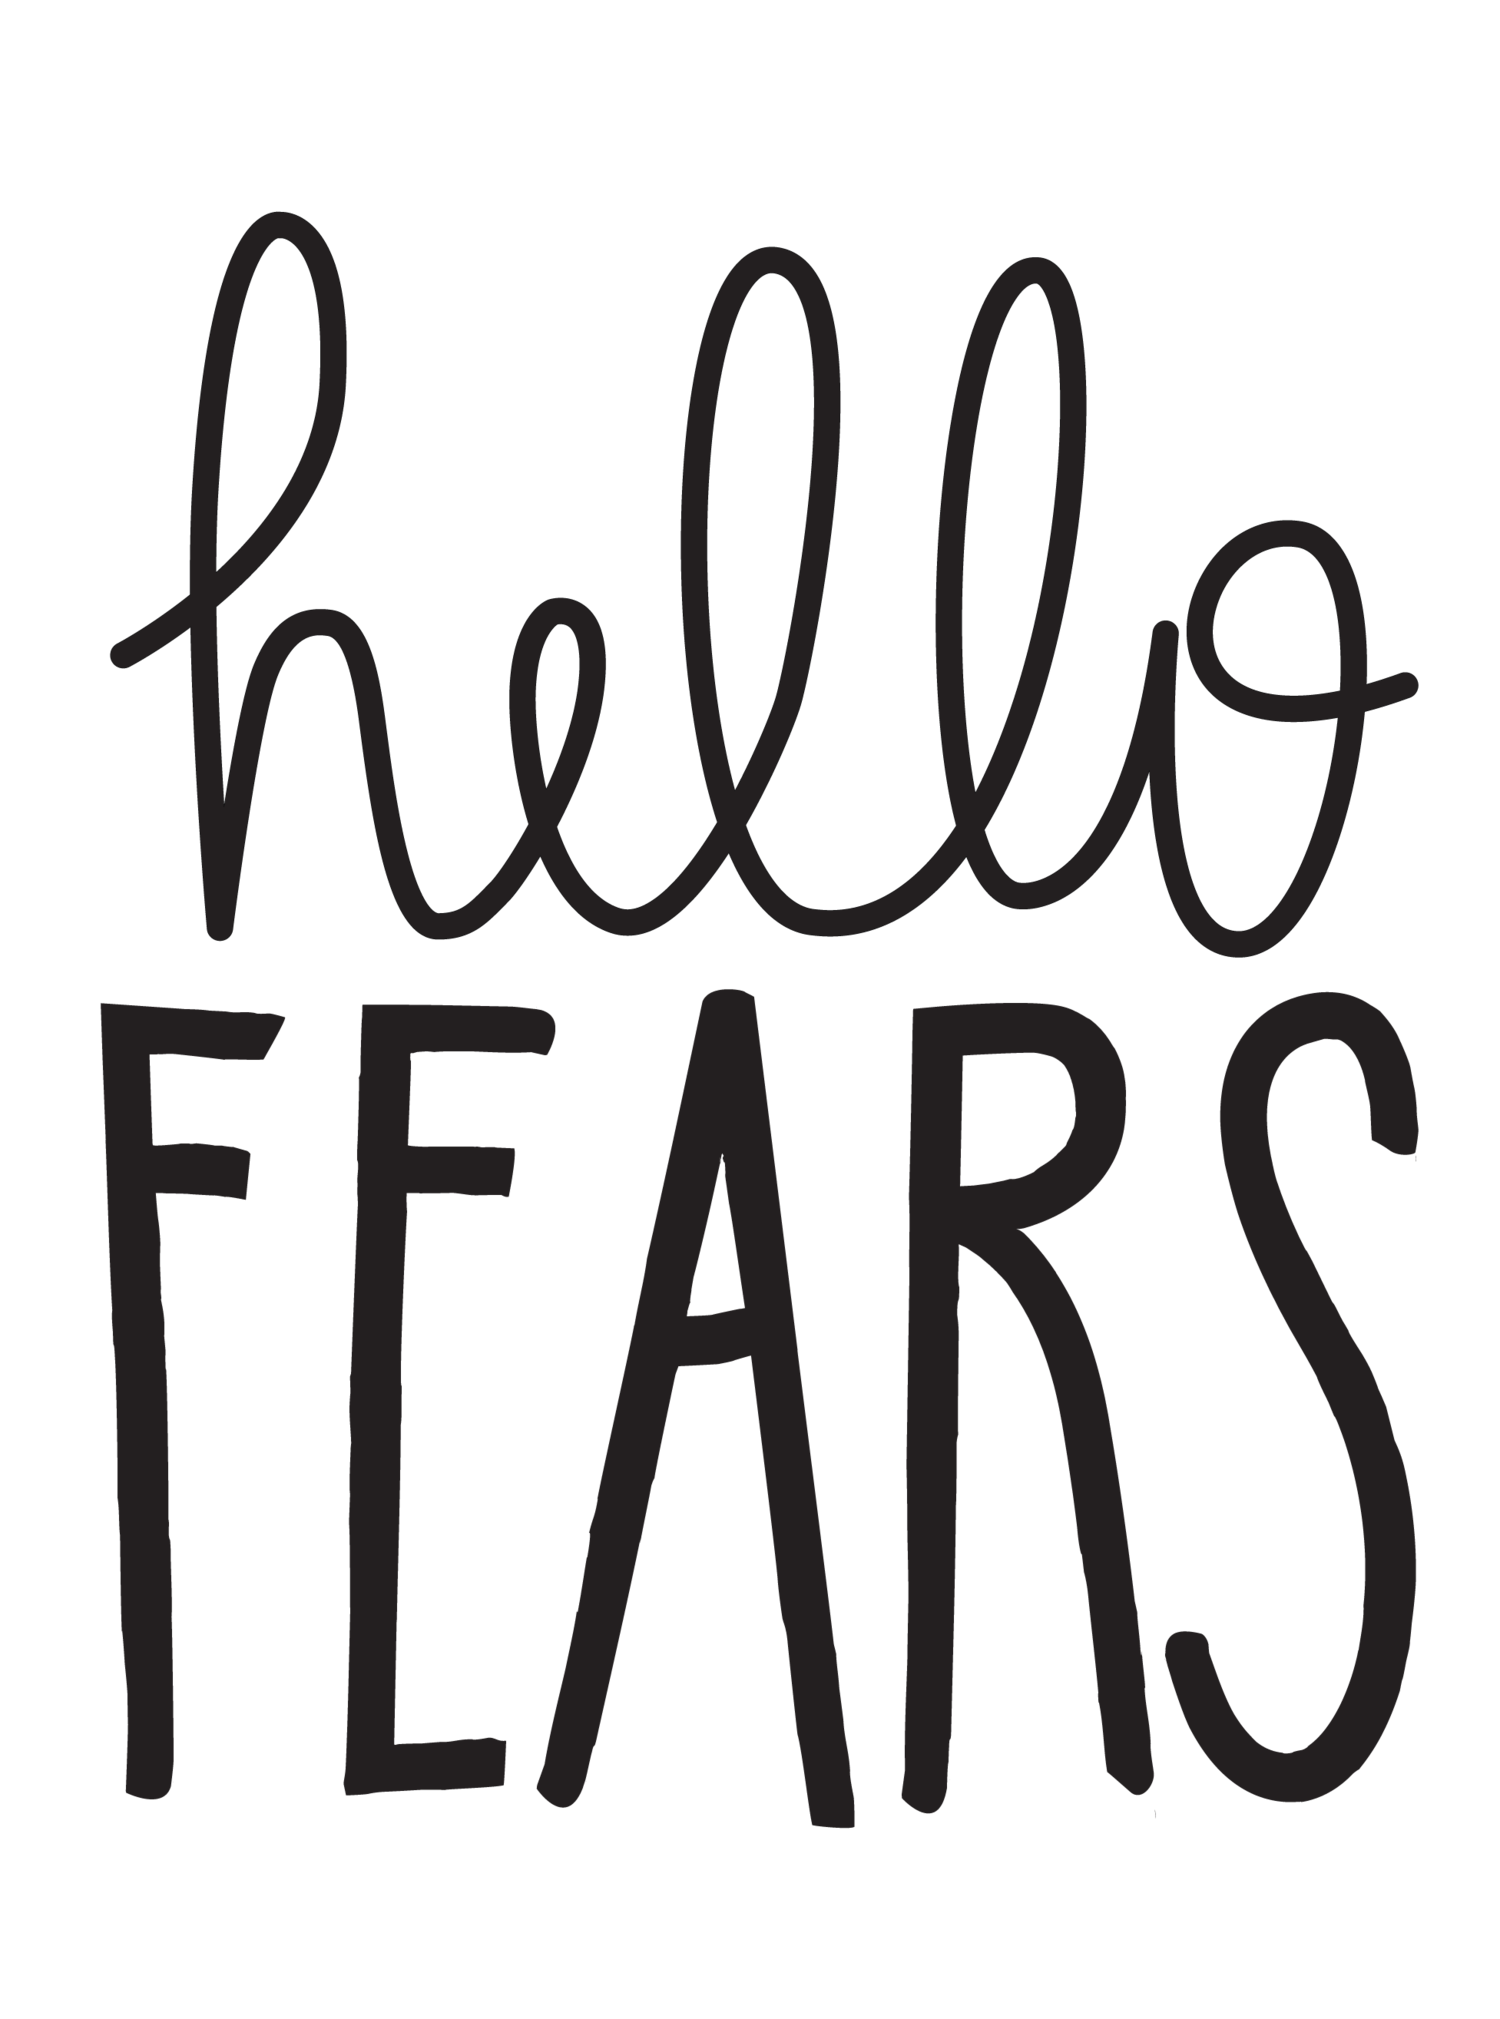 Hello Fears